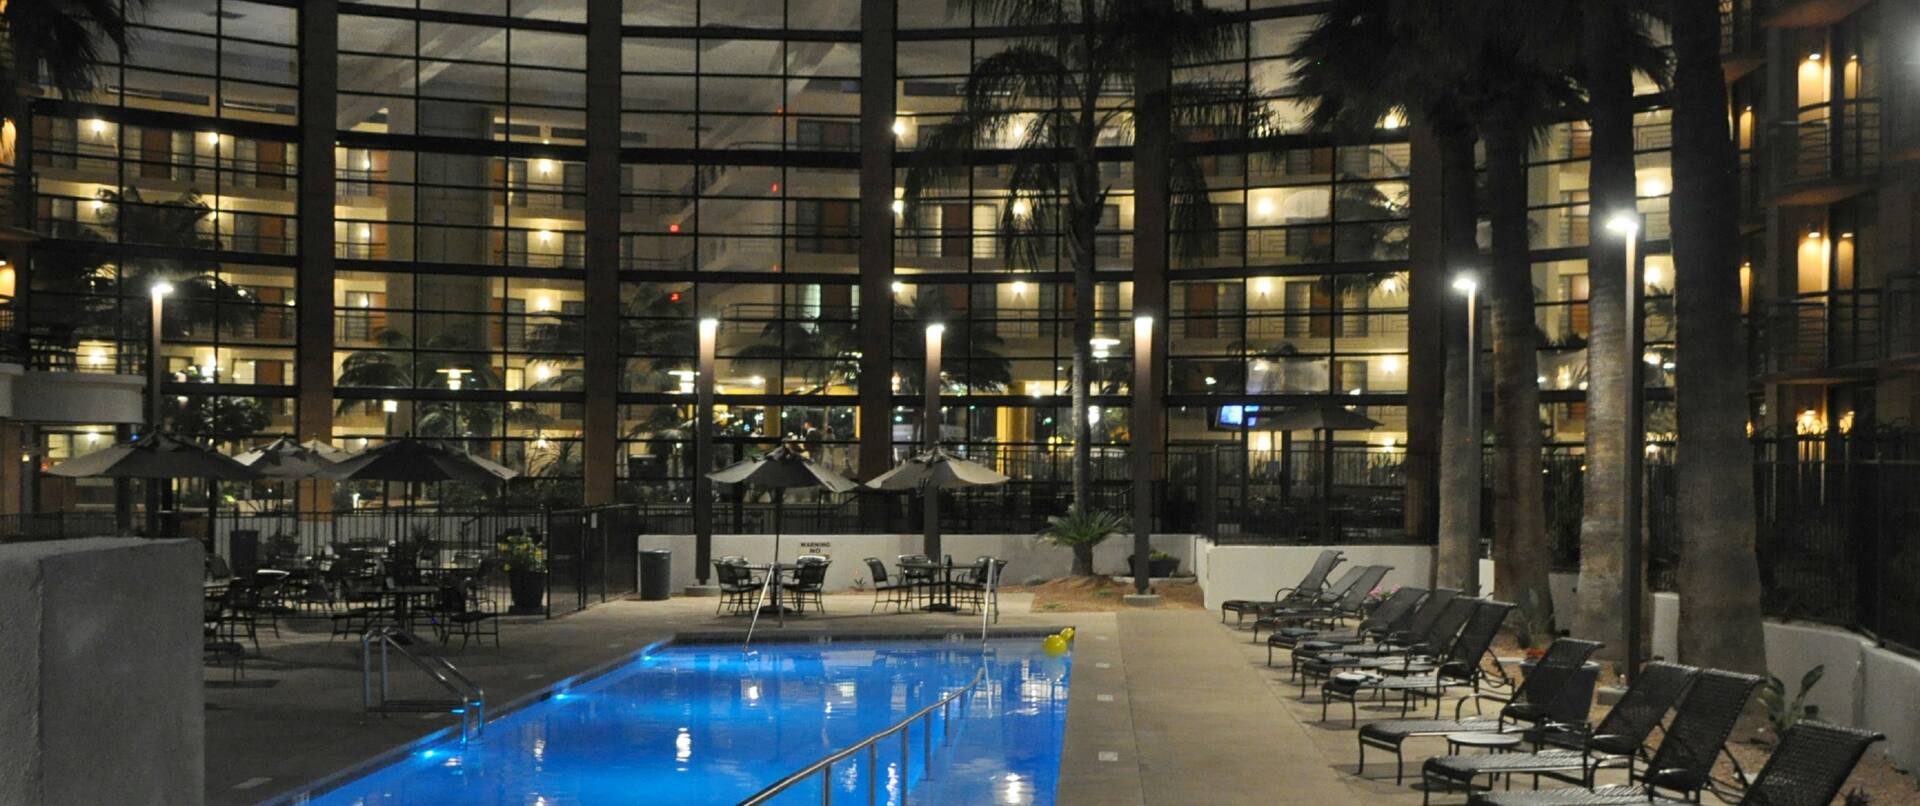 Hotel Pool Night